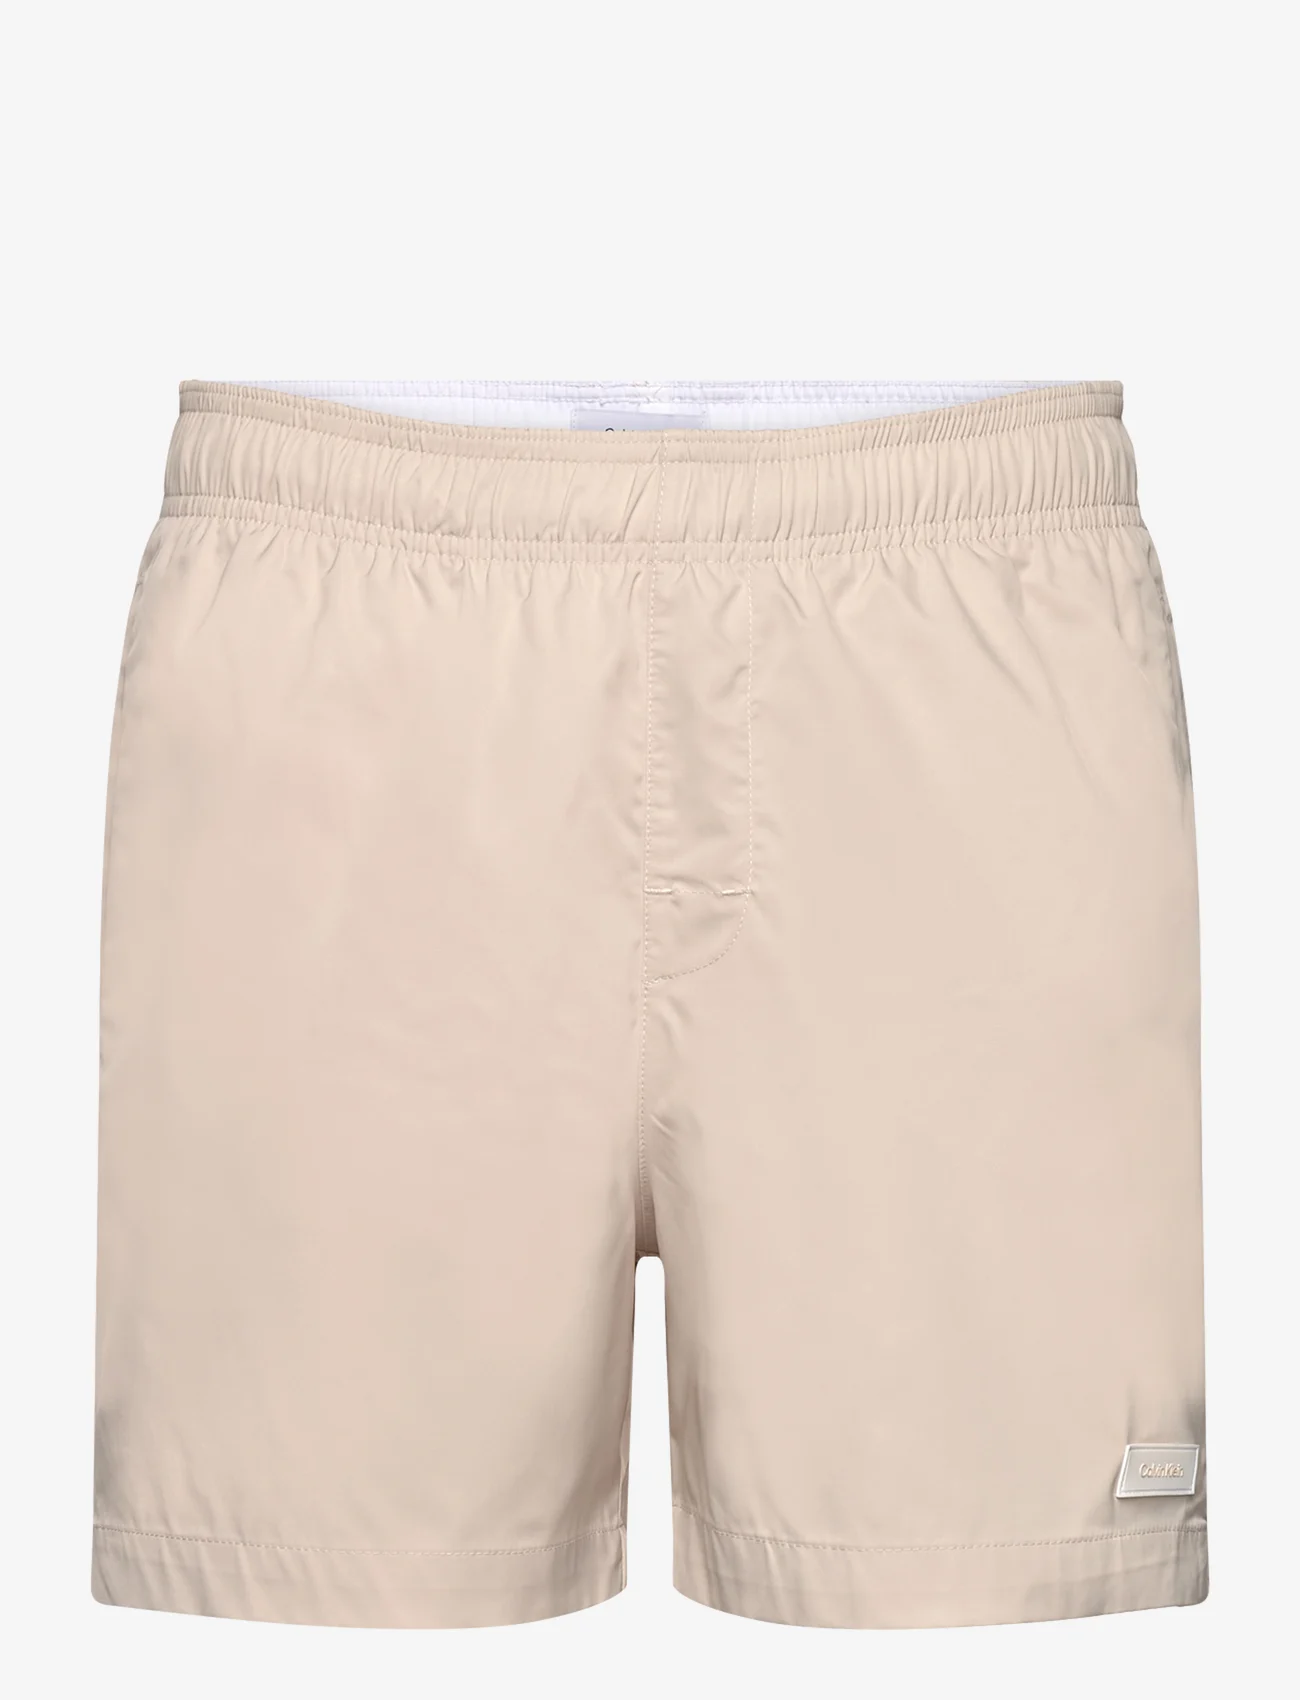 Calvin Klein - MEDIUM DRAWSTRING - shorts - stony beige - 0